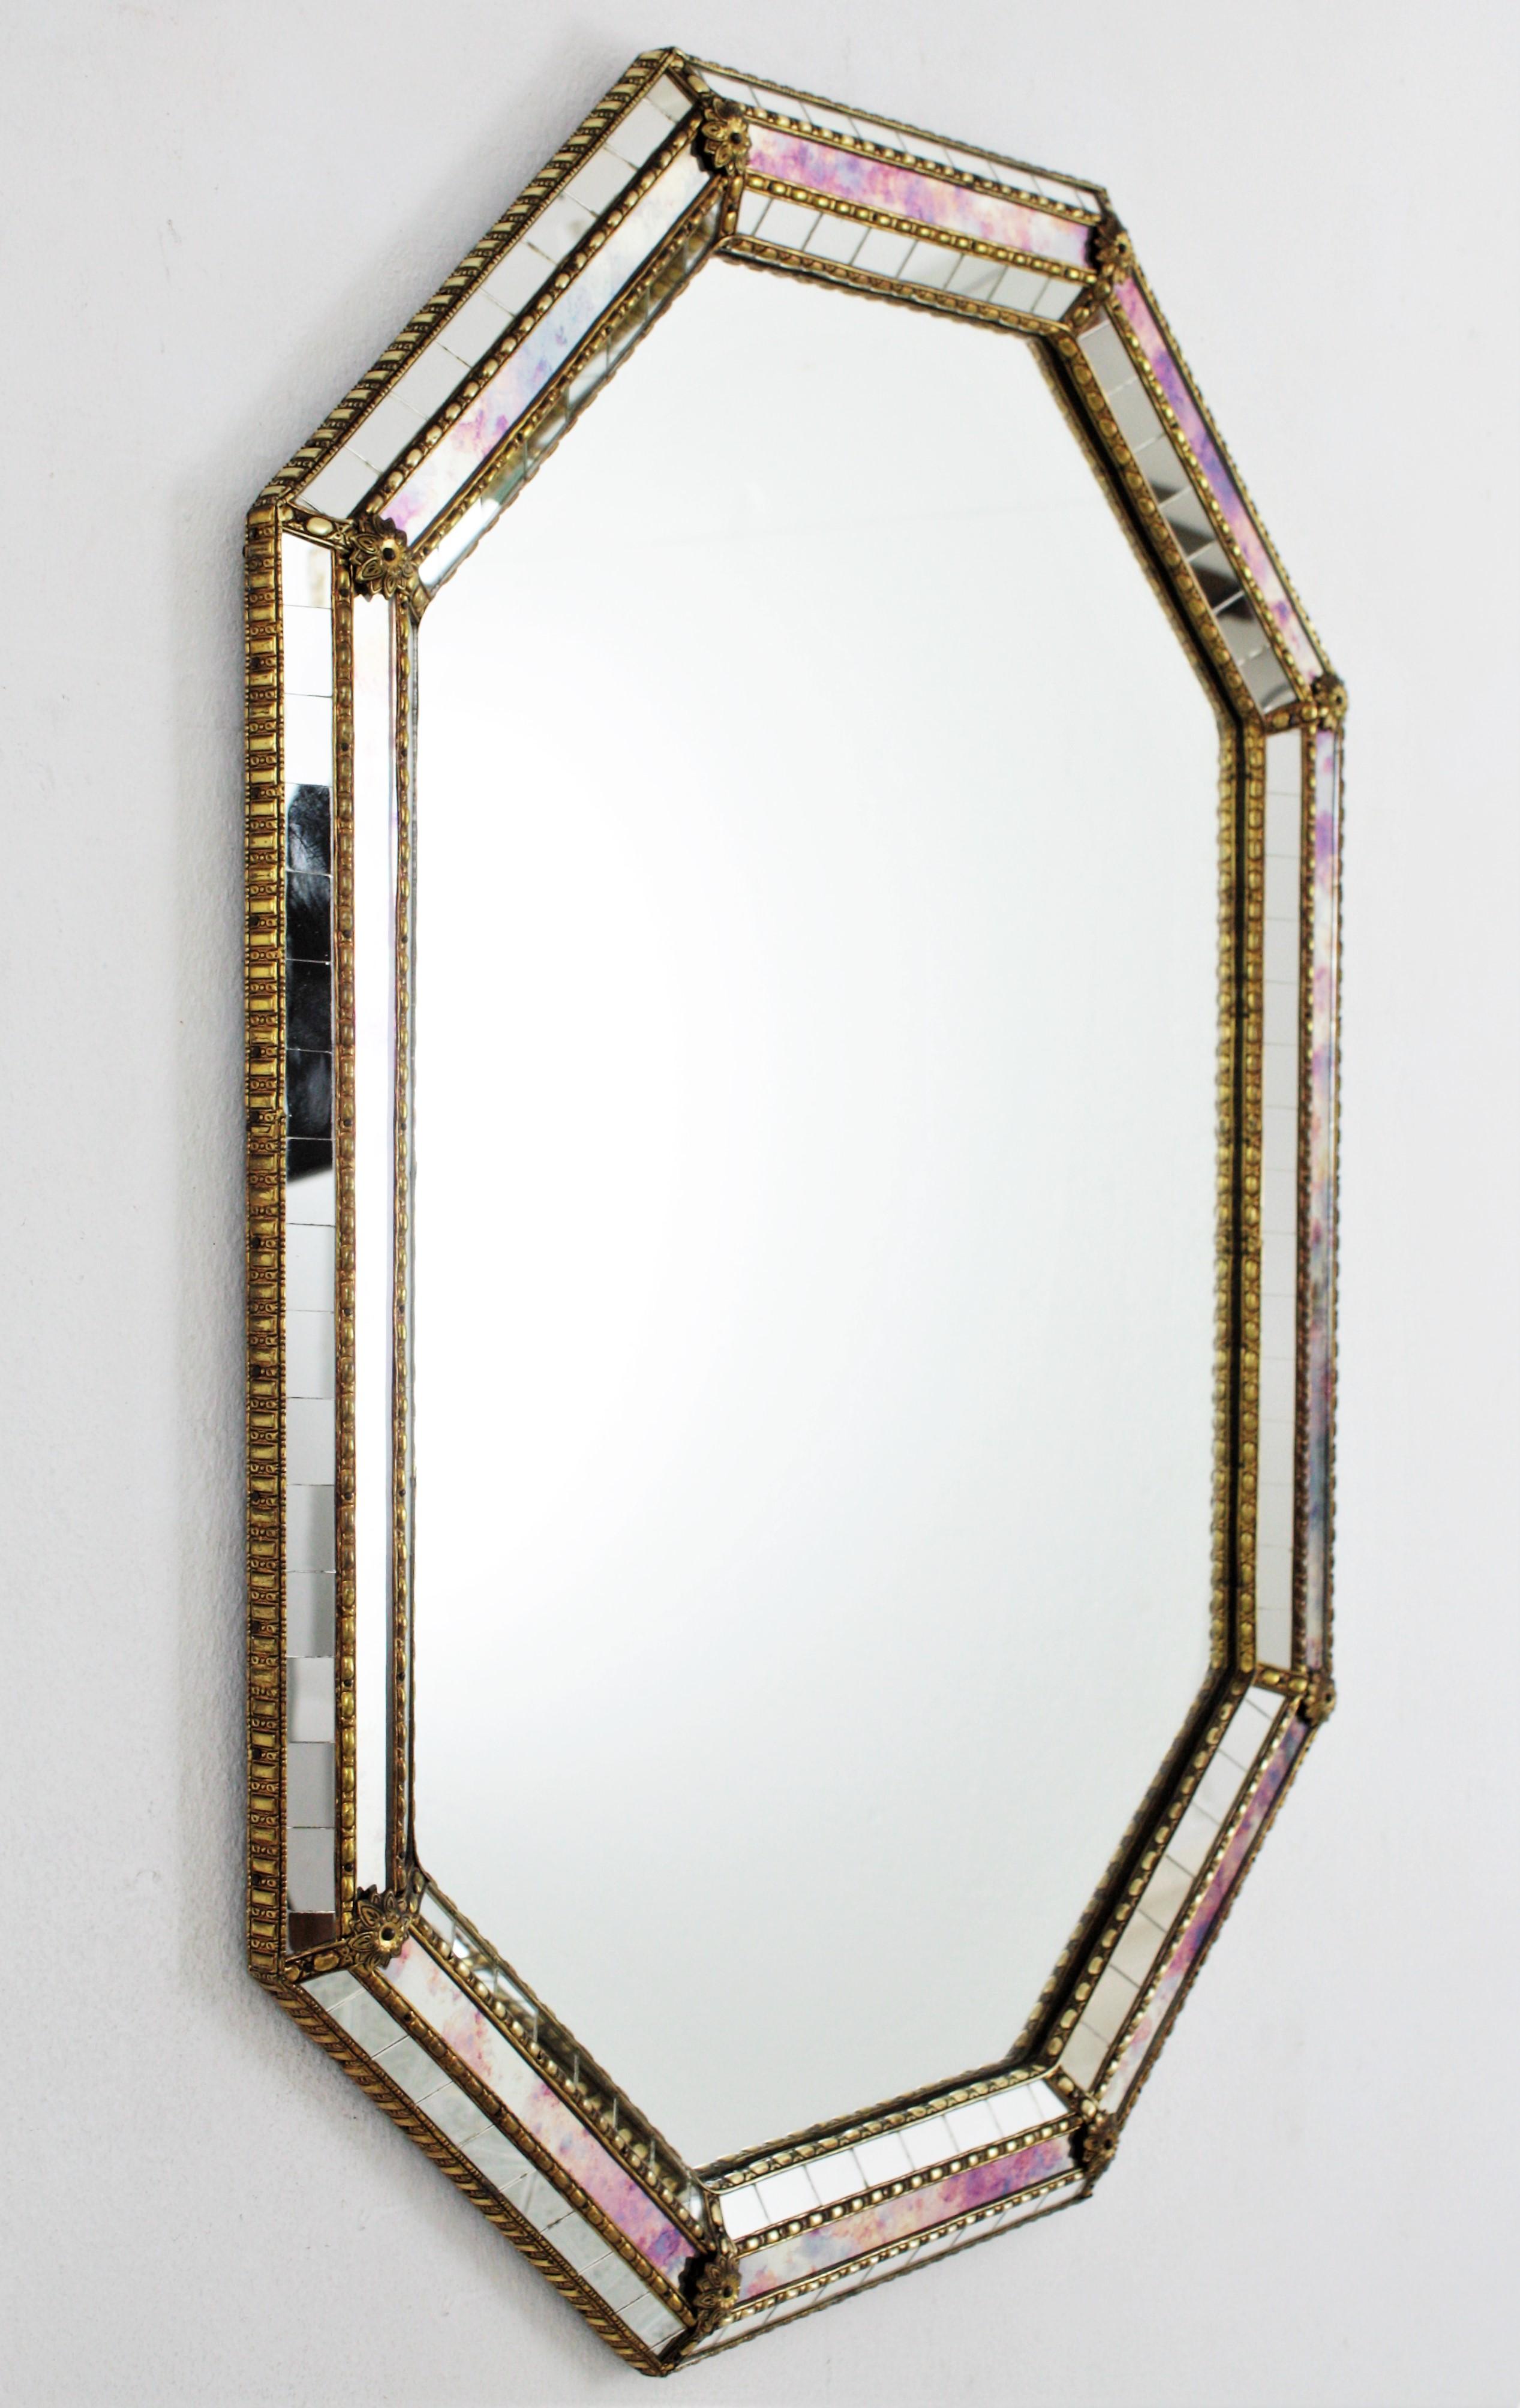 Spanish Hollywood Regency Venetian Modern Octagonal Mirror with Iridiscent Glass Accents